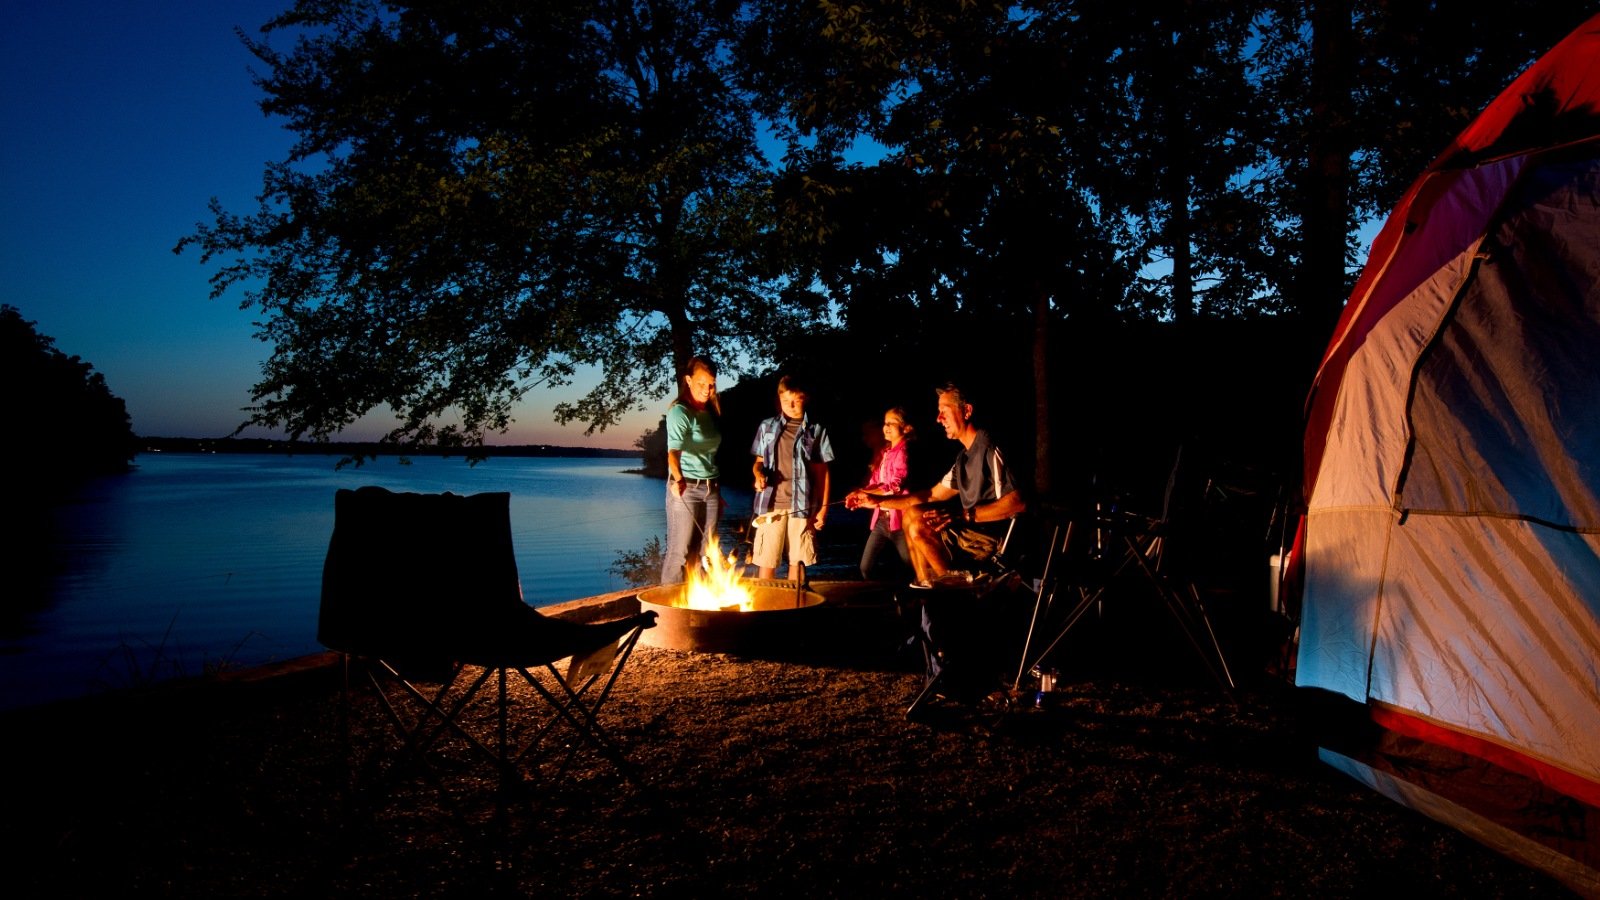 Camping outdoor. Гирлянда для кемпинга. Кемпинг с палатками у воды. Палатка с гирляндой. Кемпинг люди.